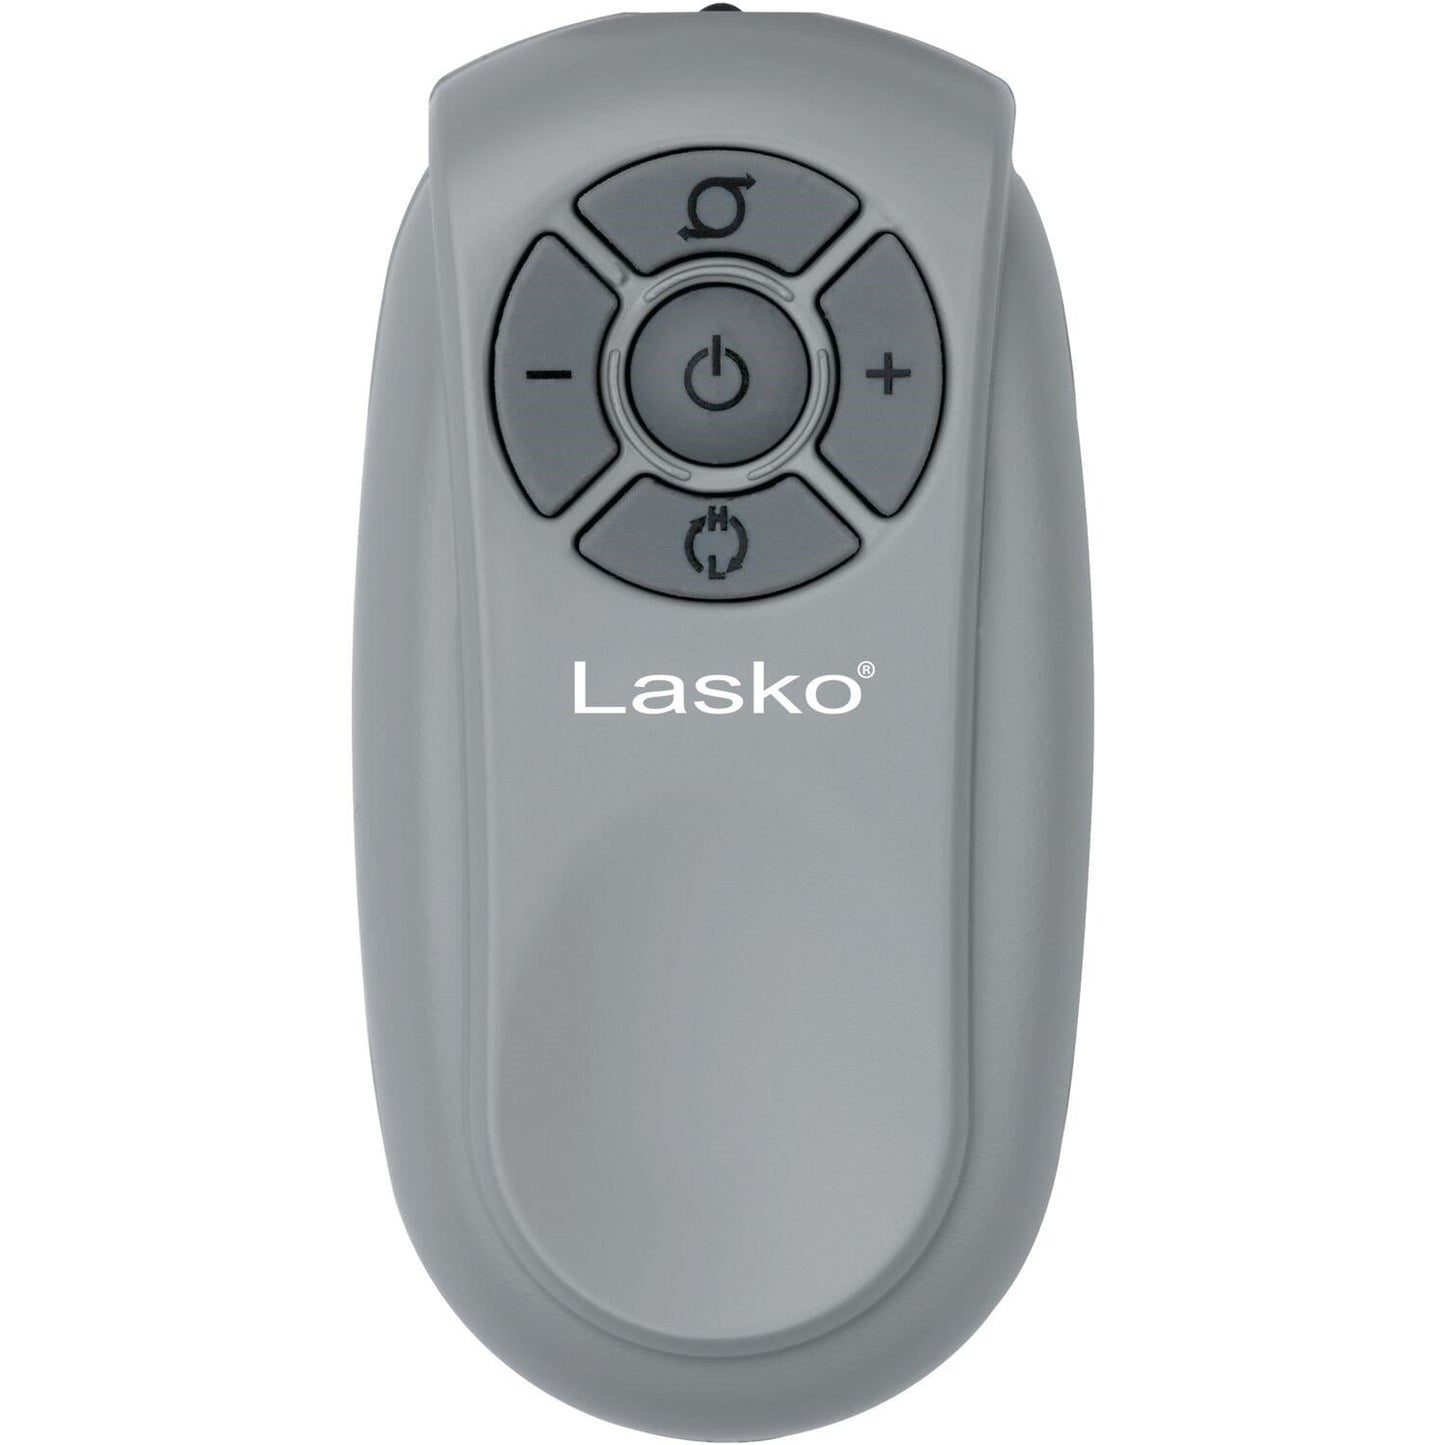 Heater Lasko/6462 Ceramic room heather w/ Remote - Black / Silver Lasko